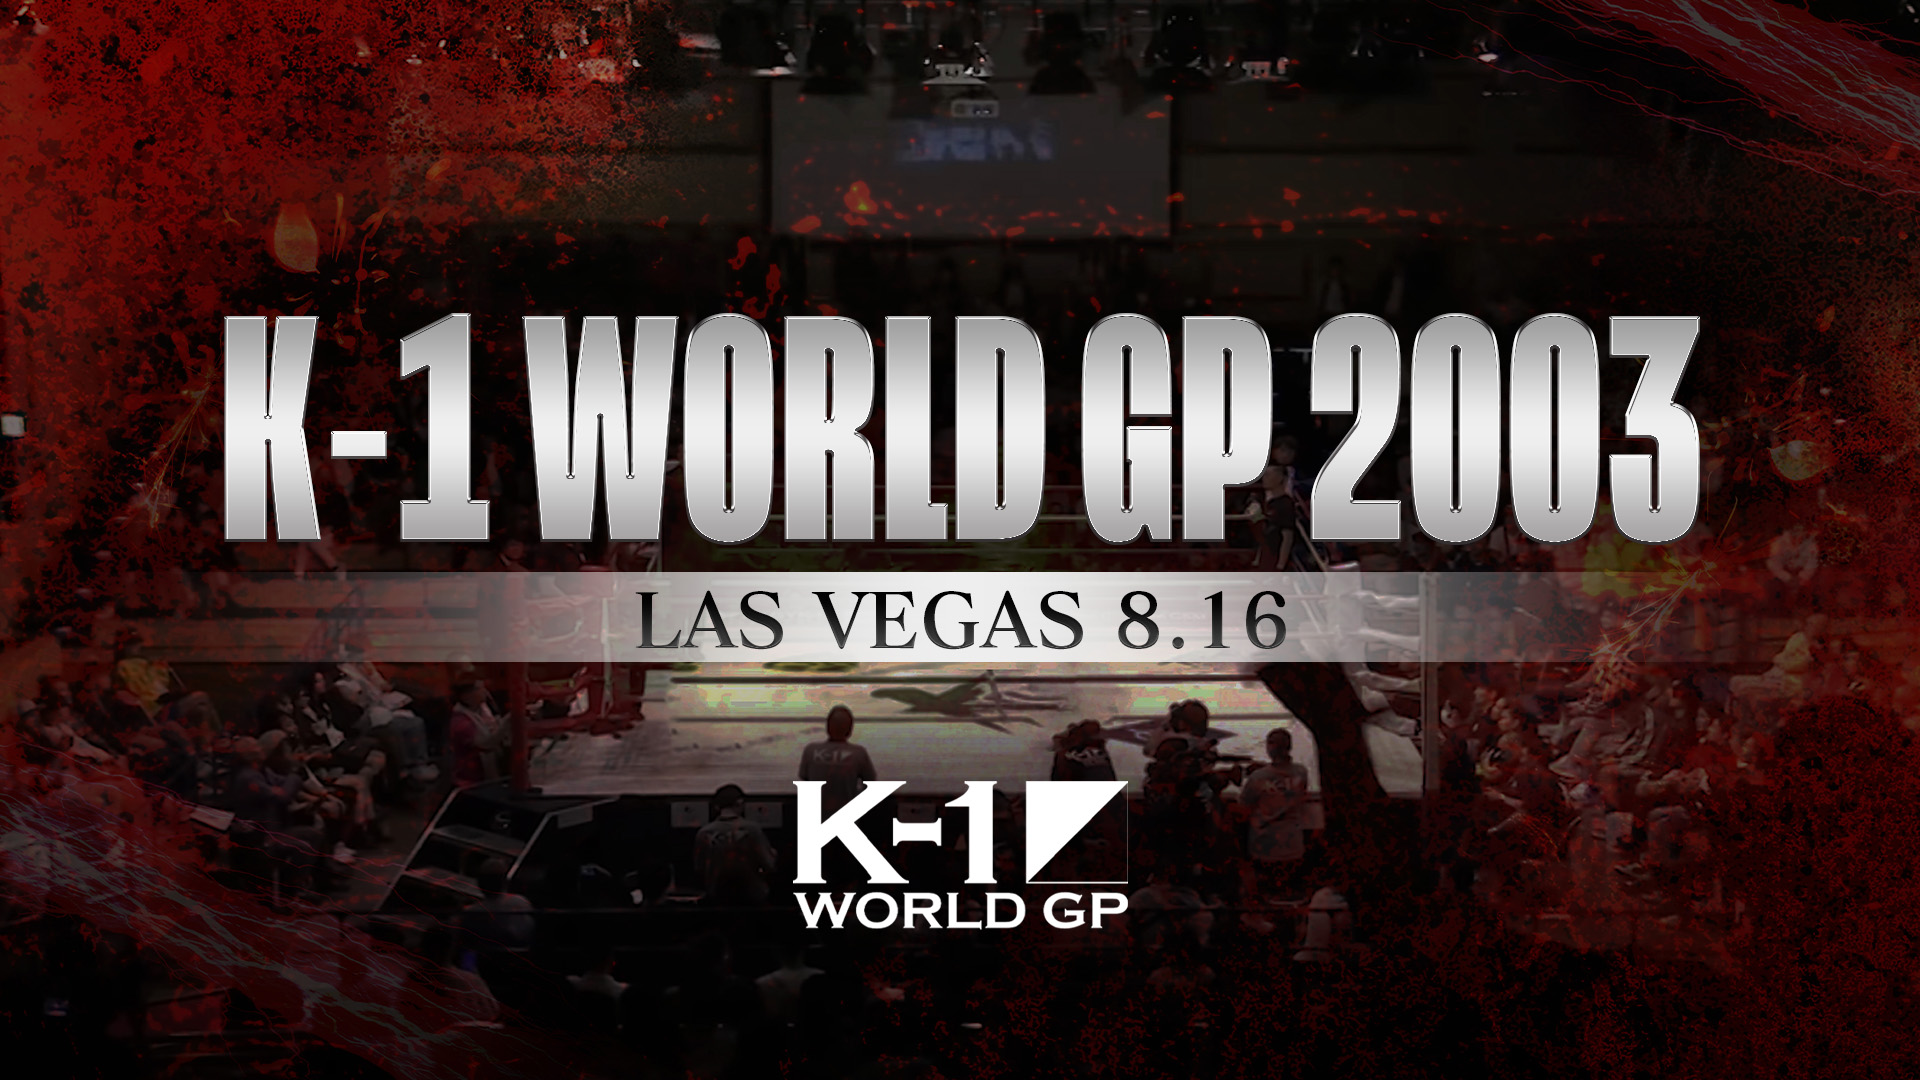 K-1 World GP 2003 Las Vegas 8.16(格闘技 / 2003) - 動画配信 | U-NEXT 31日間無料トライアル